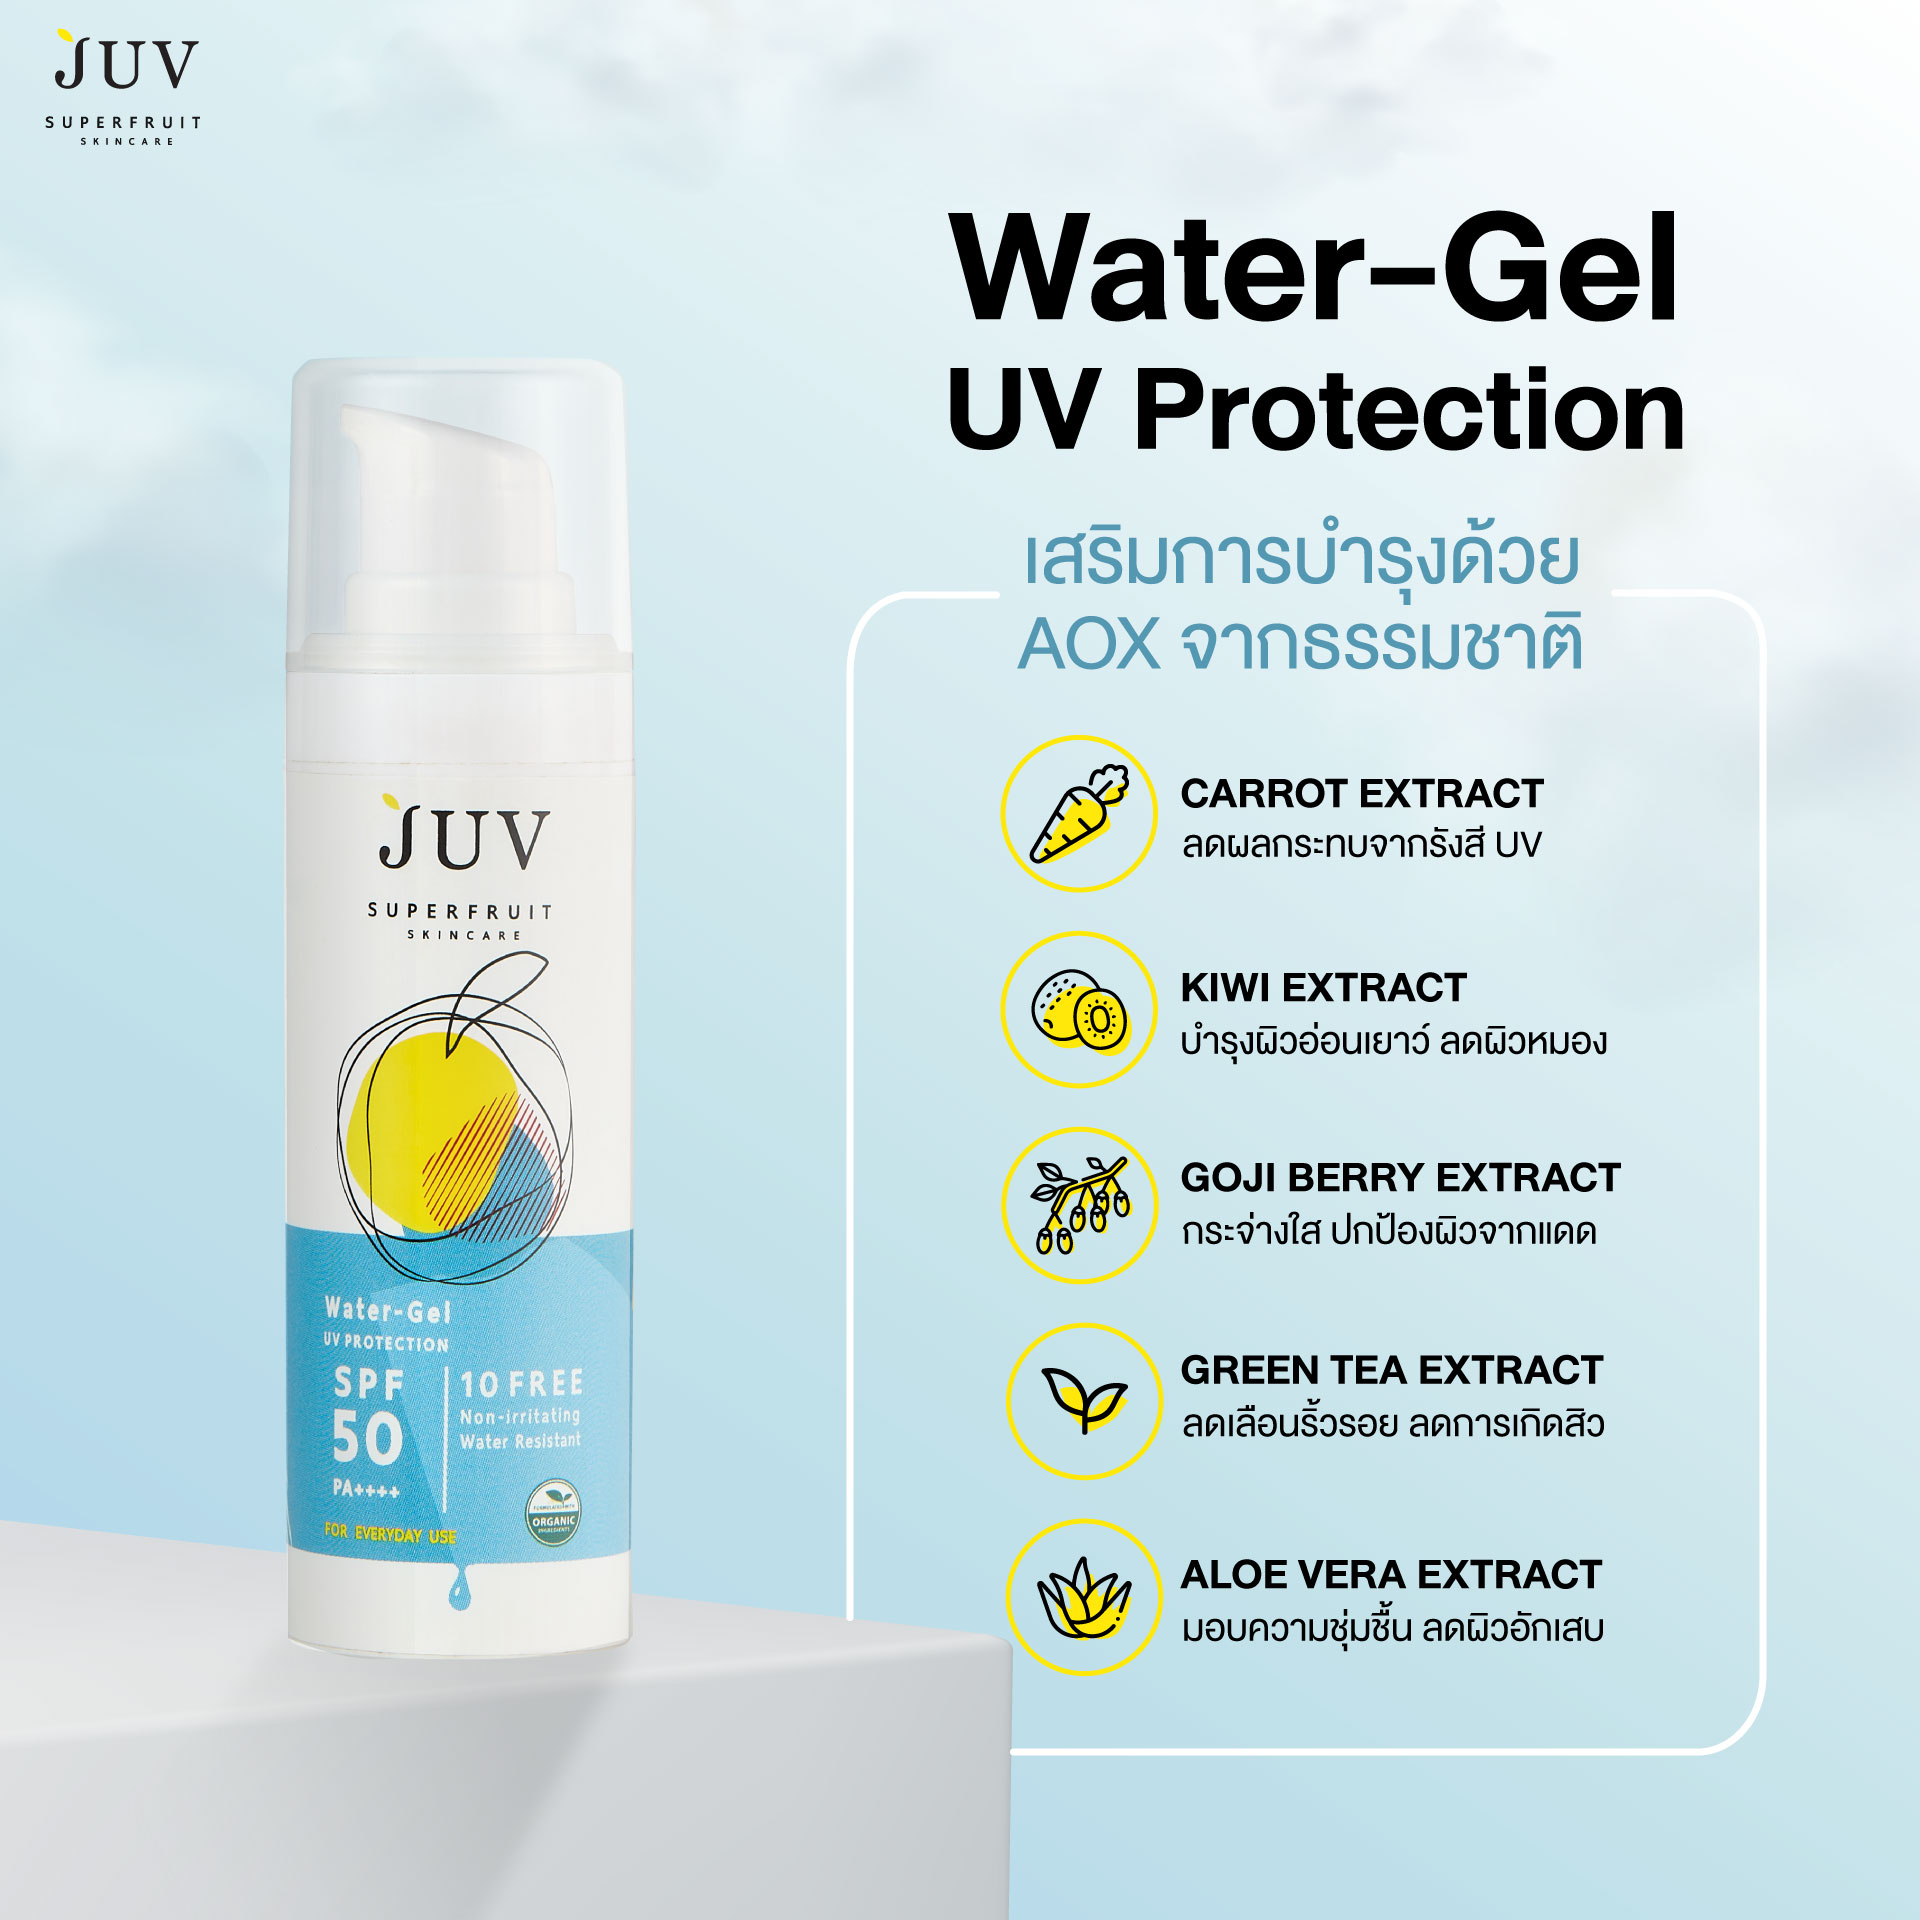 JUV AOX Sunscreen